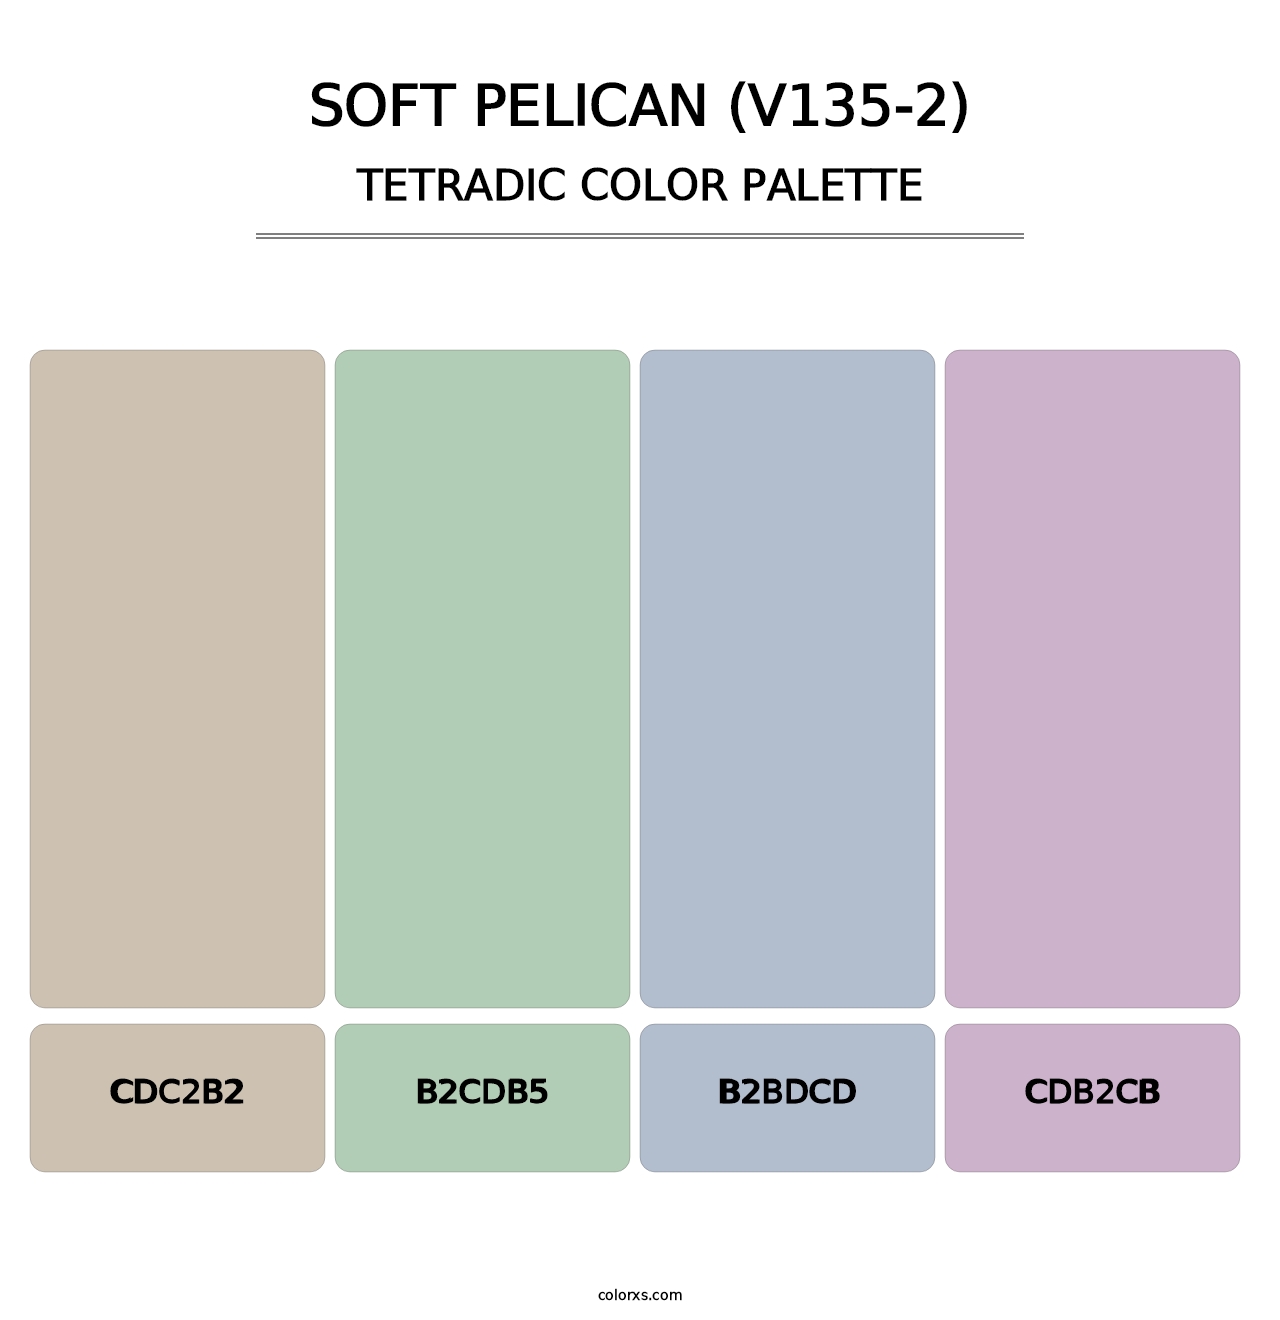 Soft Pelican (V135-2) - Tetradic Color Palette